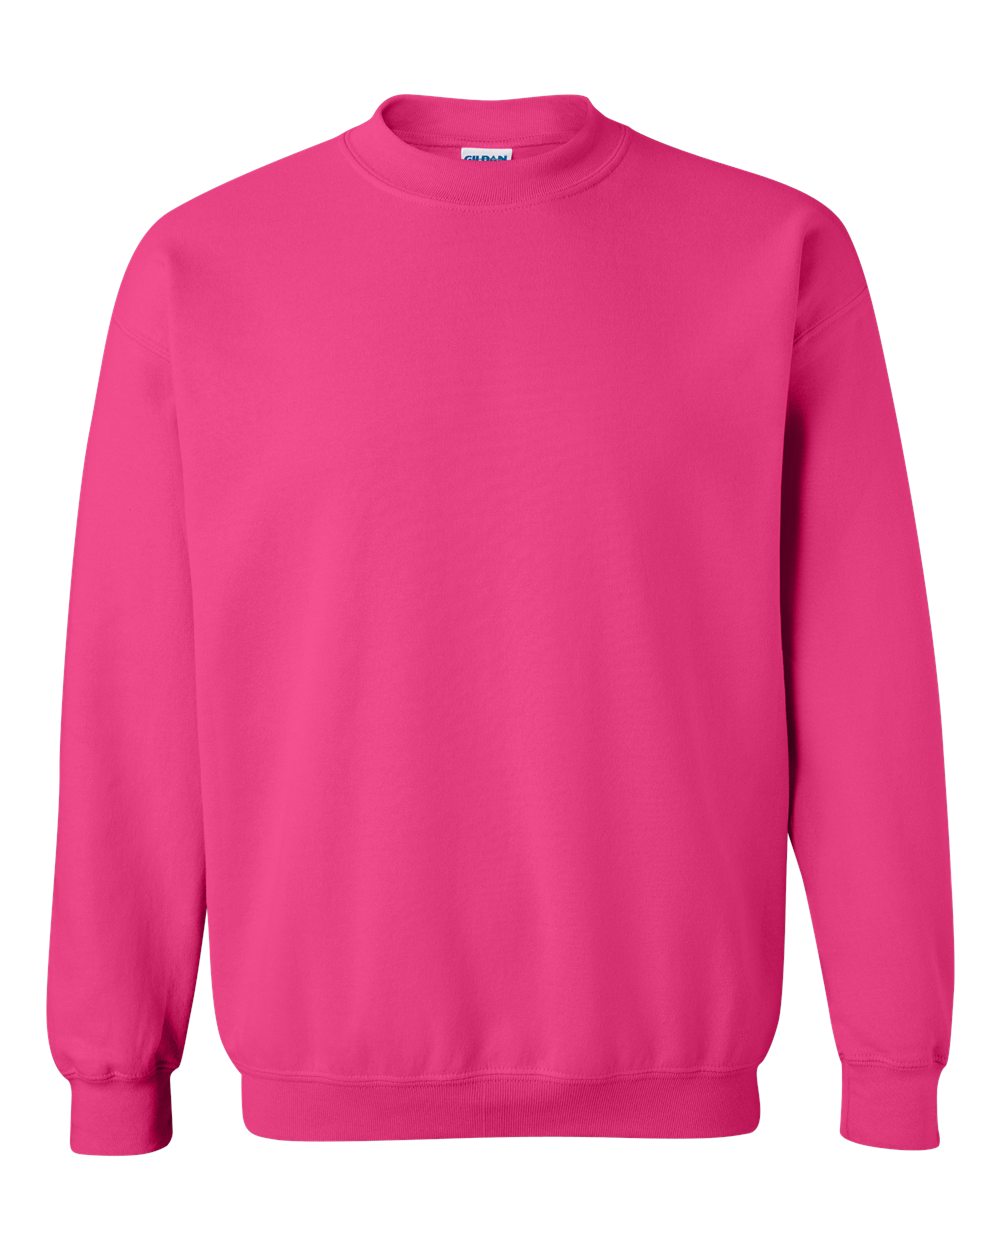 Gildan 18000 Heavy Blend Adult Sweatshirt - Heliconia